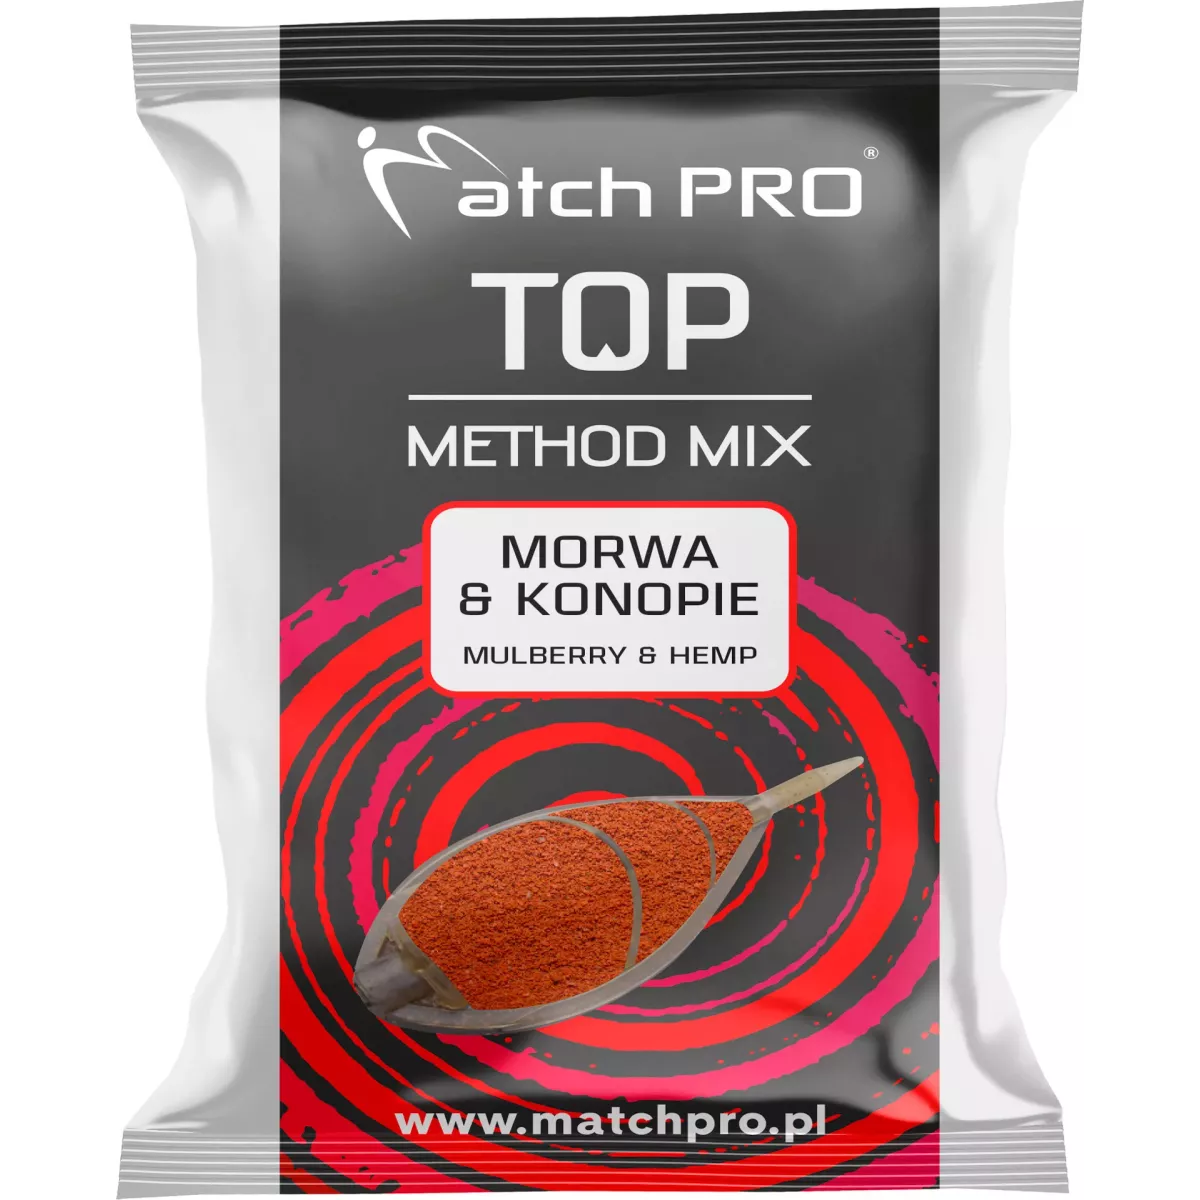 Zanęta MatchPro Method Mix TOP 700g - MORWA & KONOPIE